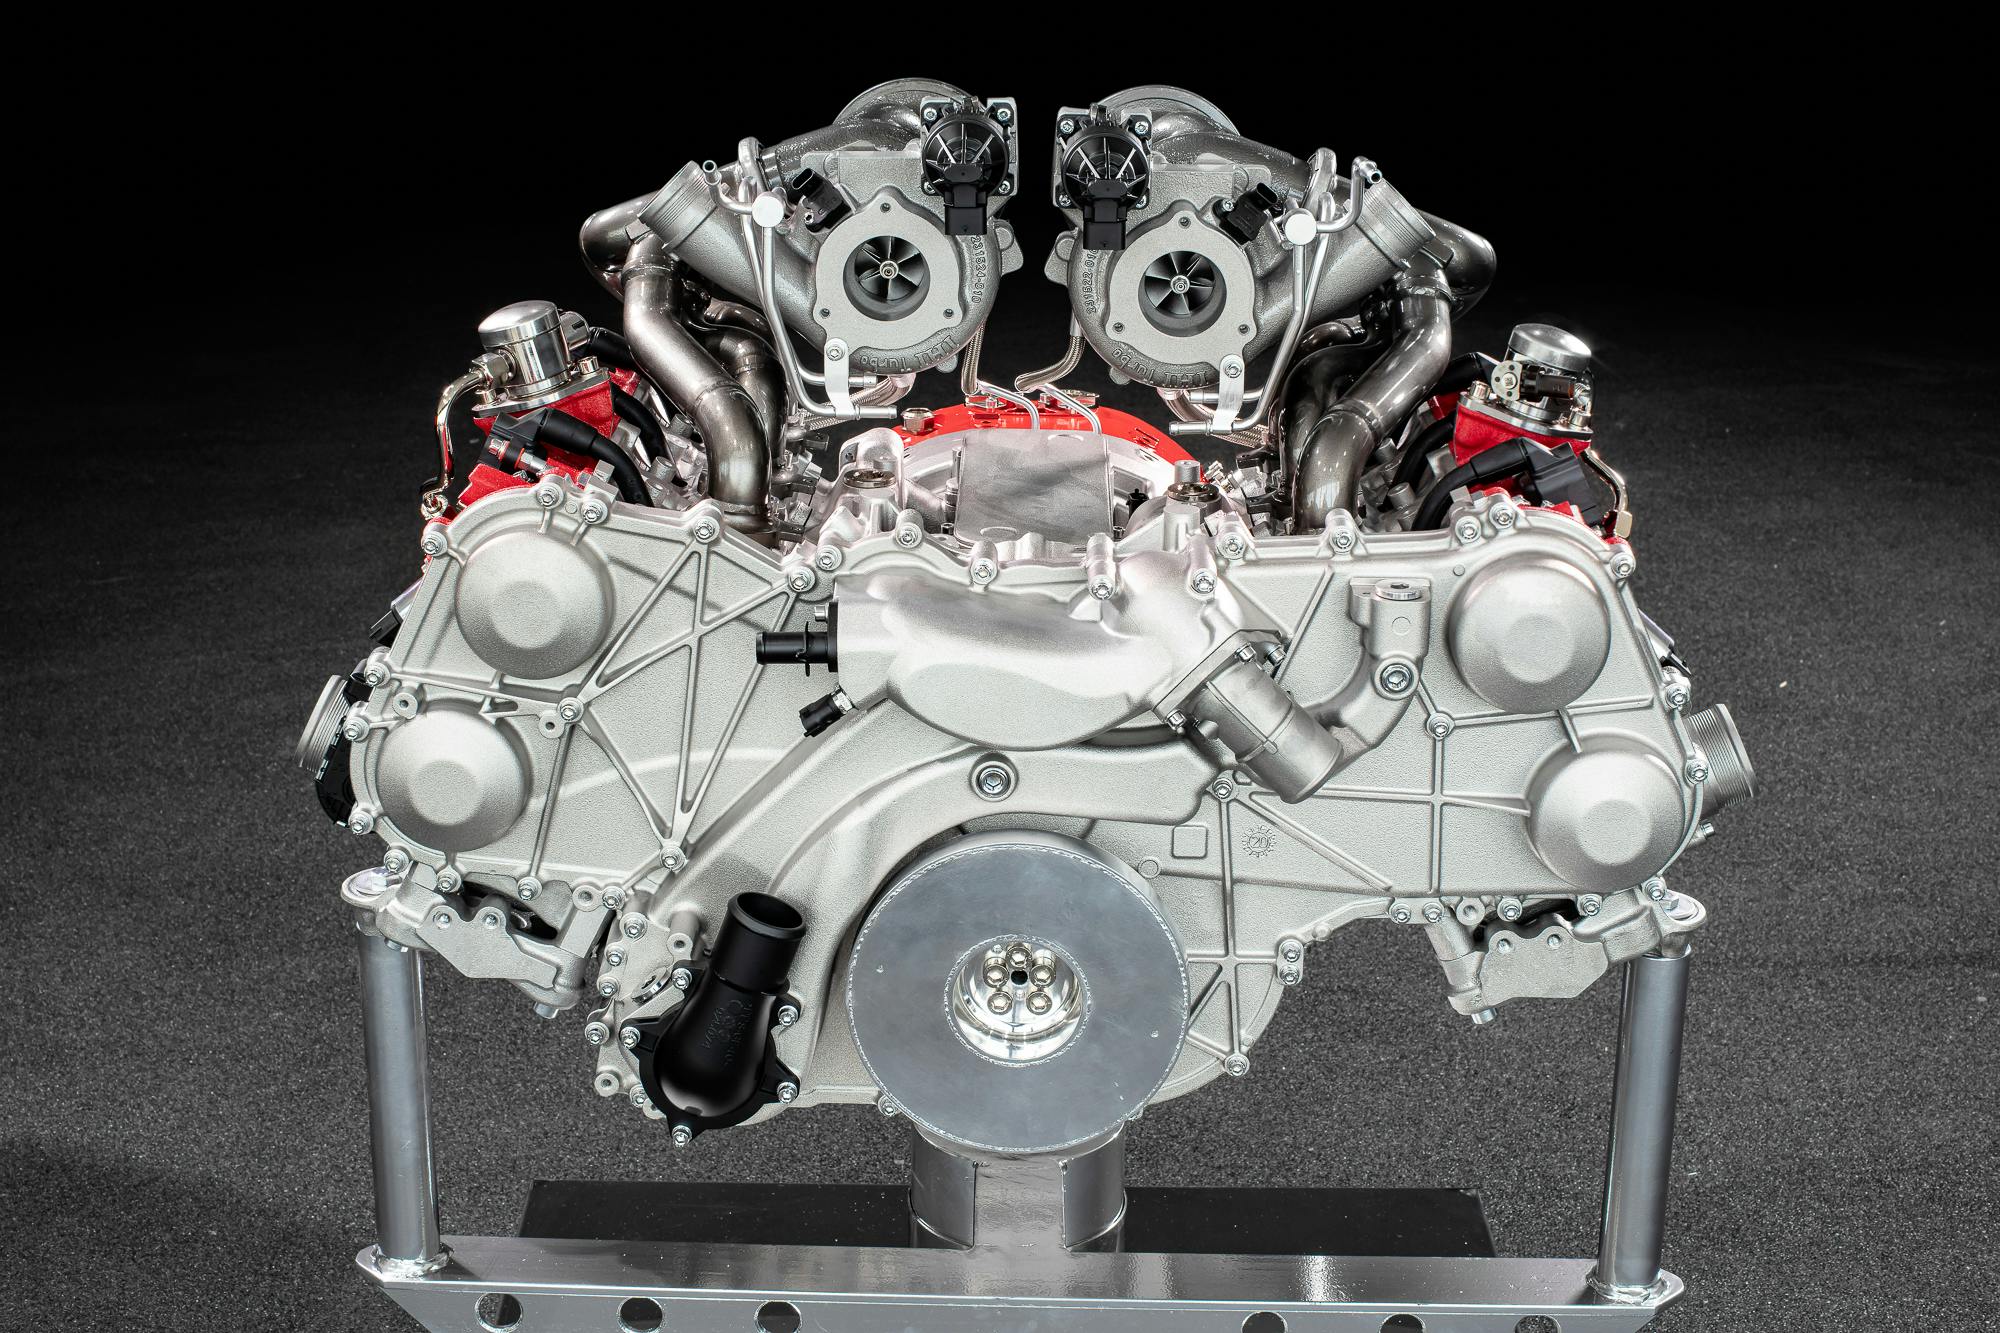 Ferrari 296 GTB engine rear